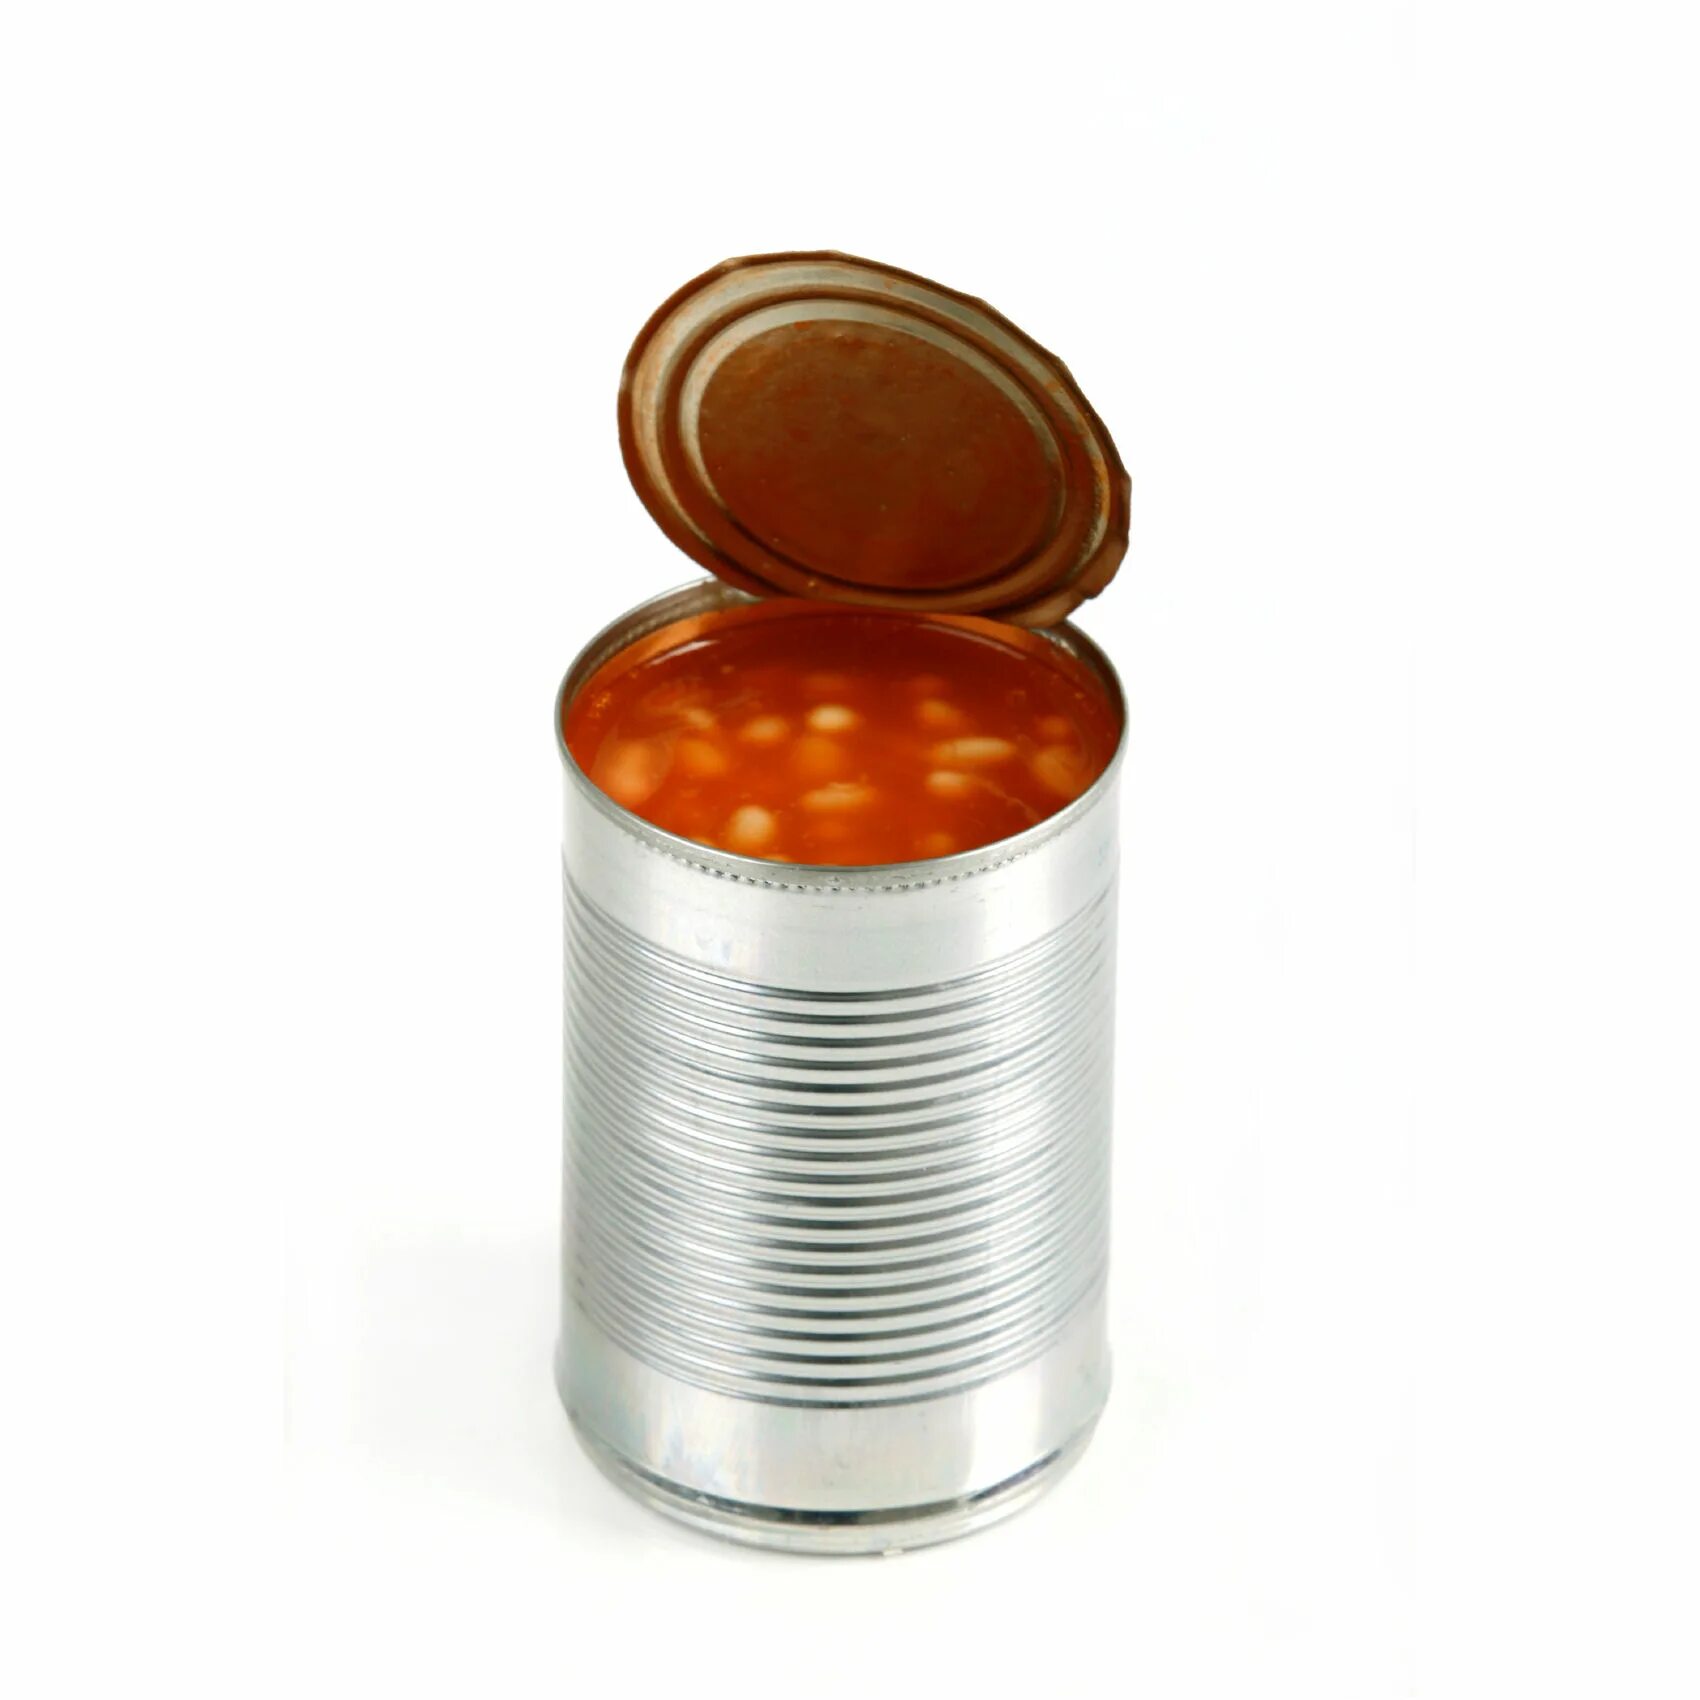 Бин тин. Консервная банка бобов. Железная банка с бобами. Can контейнер. Beans tin can.